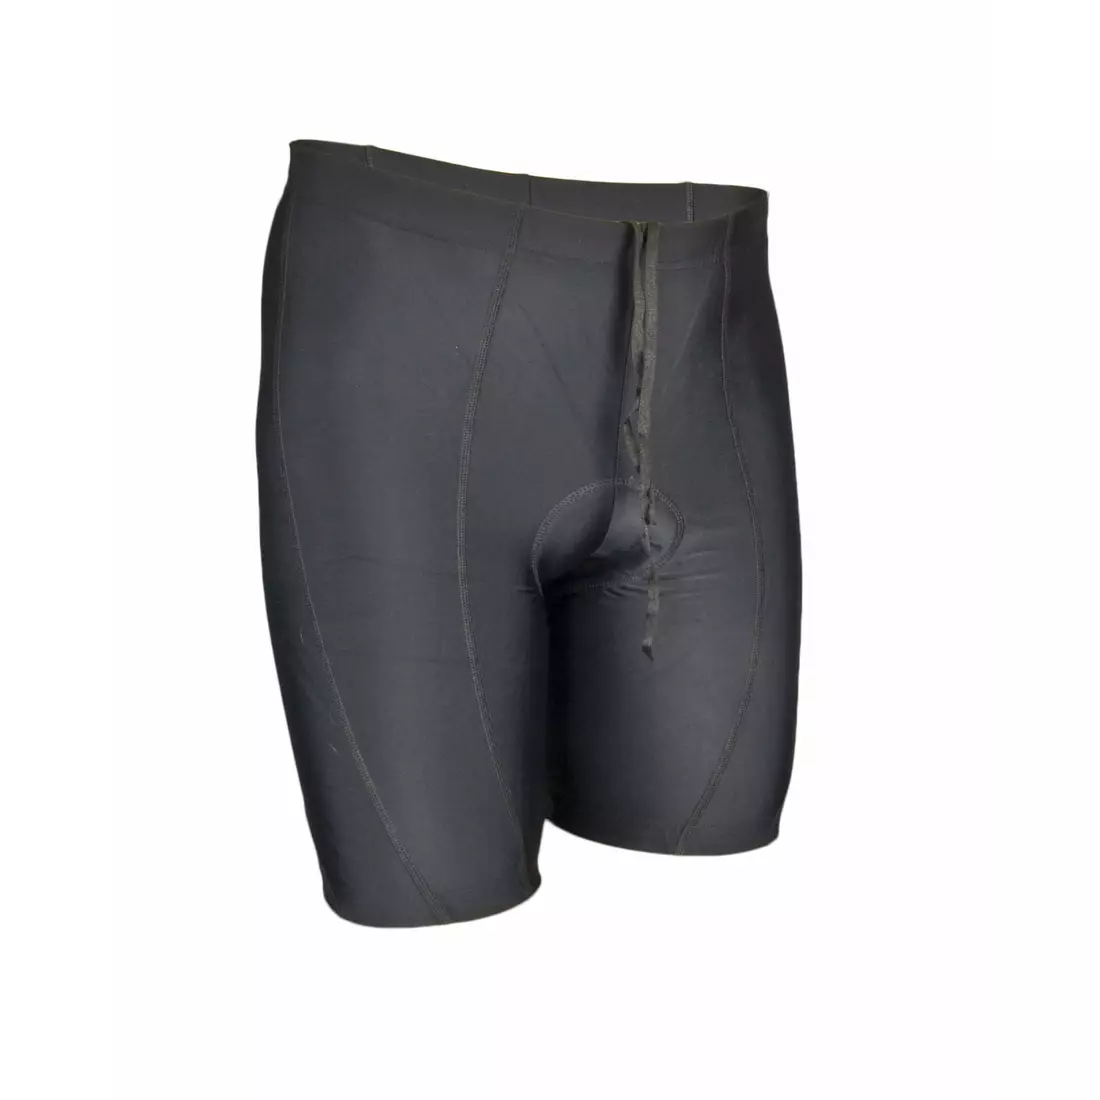 MikeSPORT BRUNO men's cycling shorts, gel insert, black 20016-4